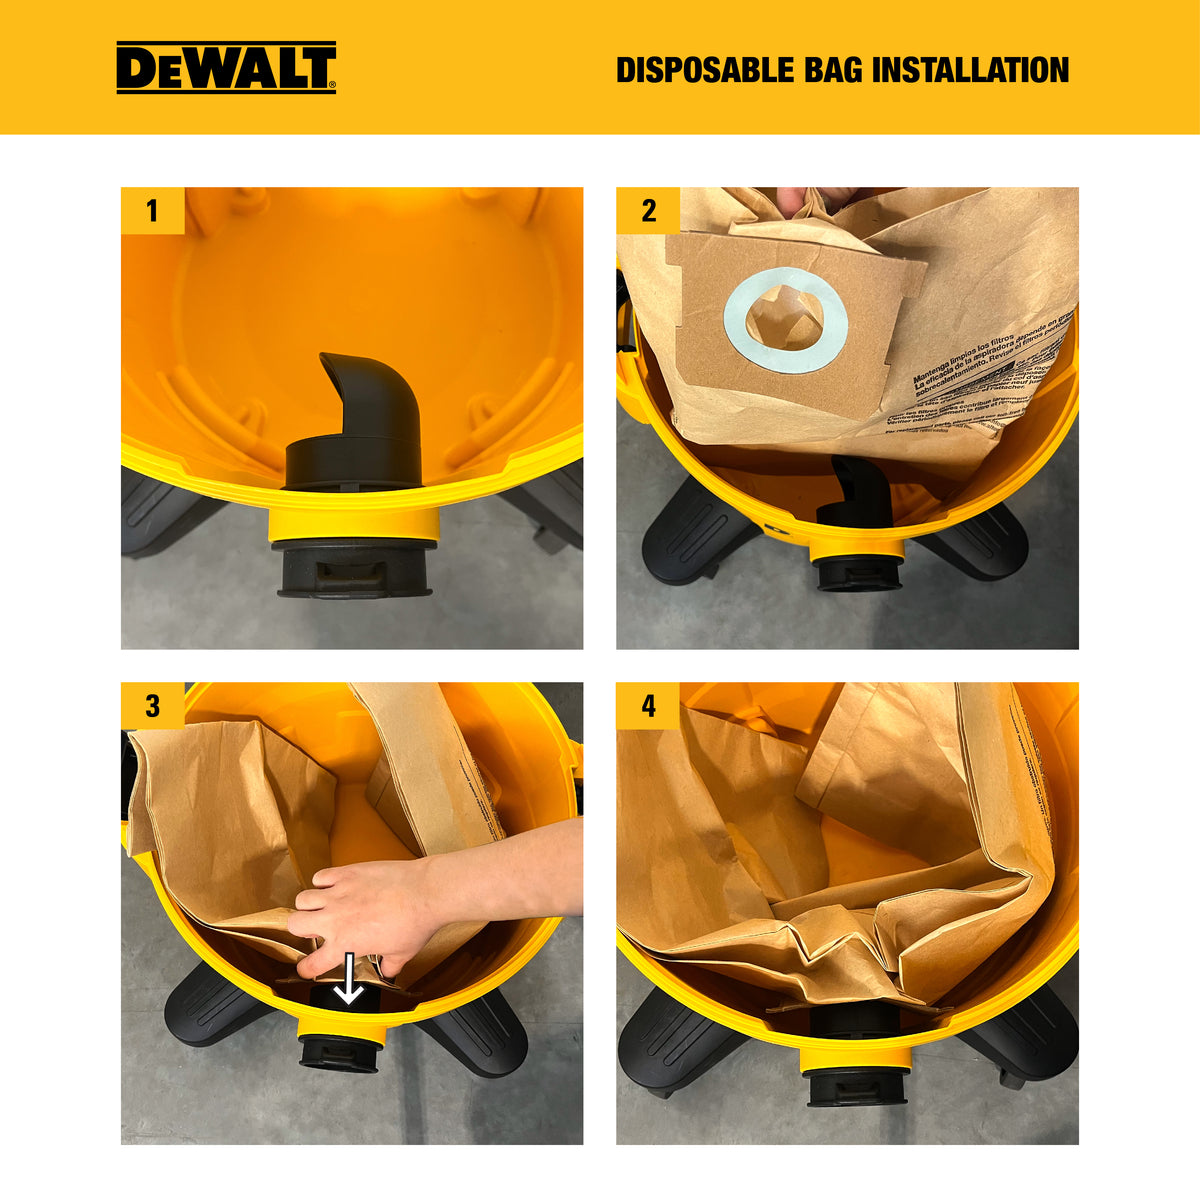 DXVA19-4104 Disposable Filter Bag 3-Pack